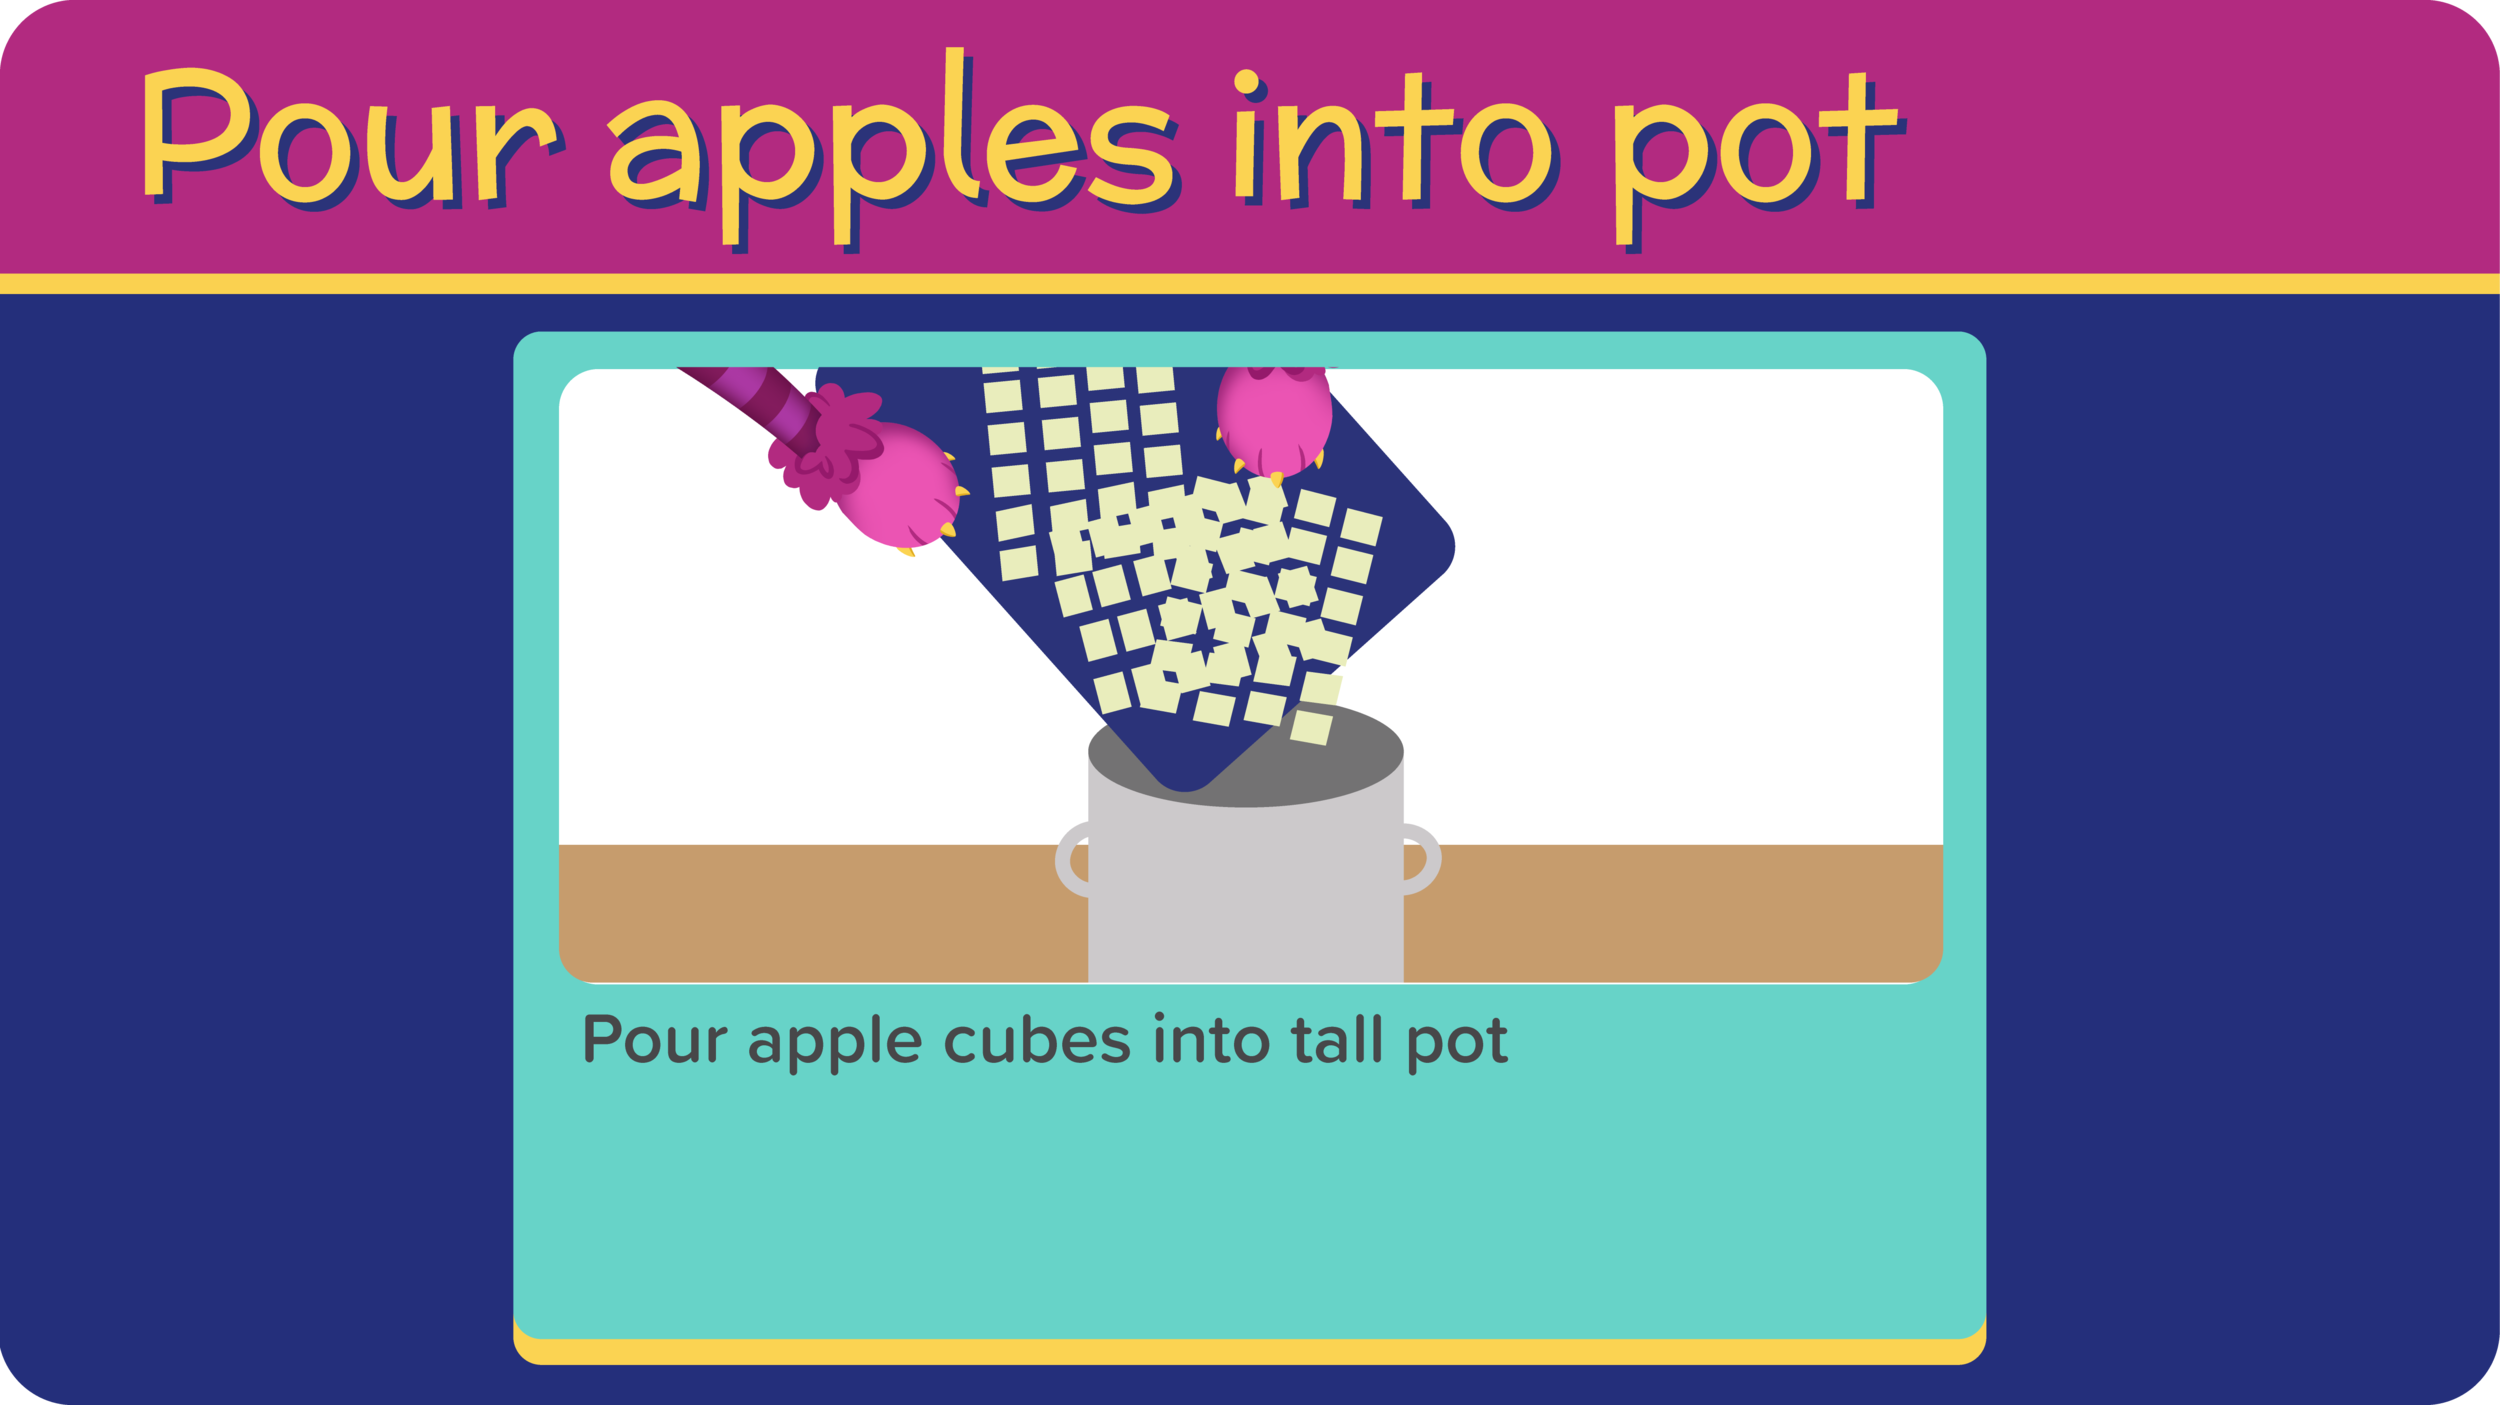 11_AppleSauce_Apples into pot-01.png